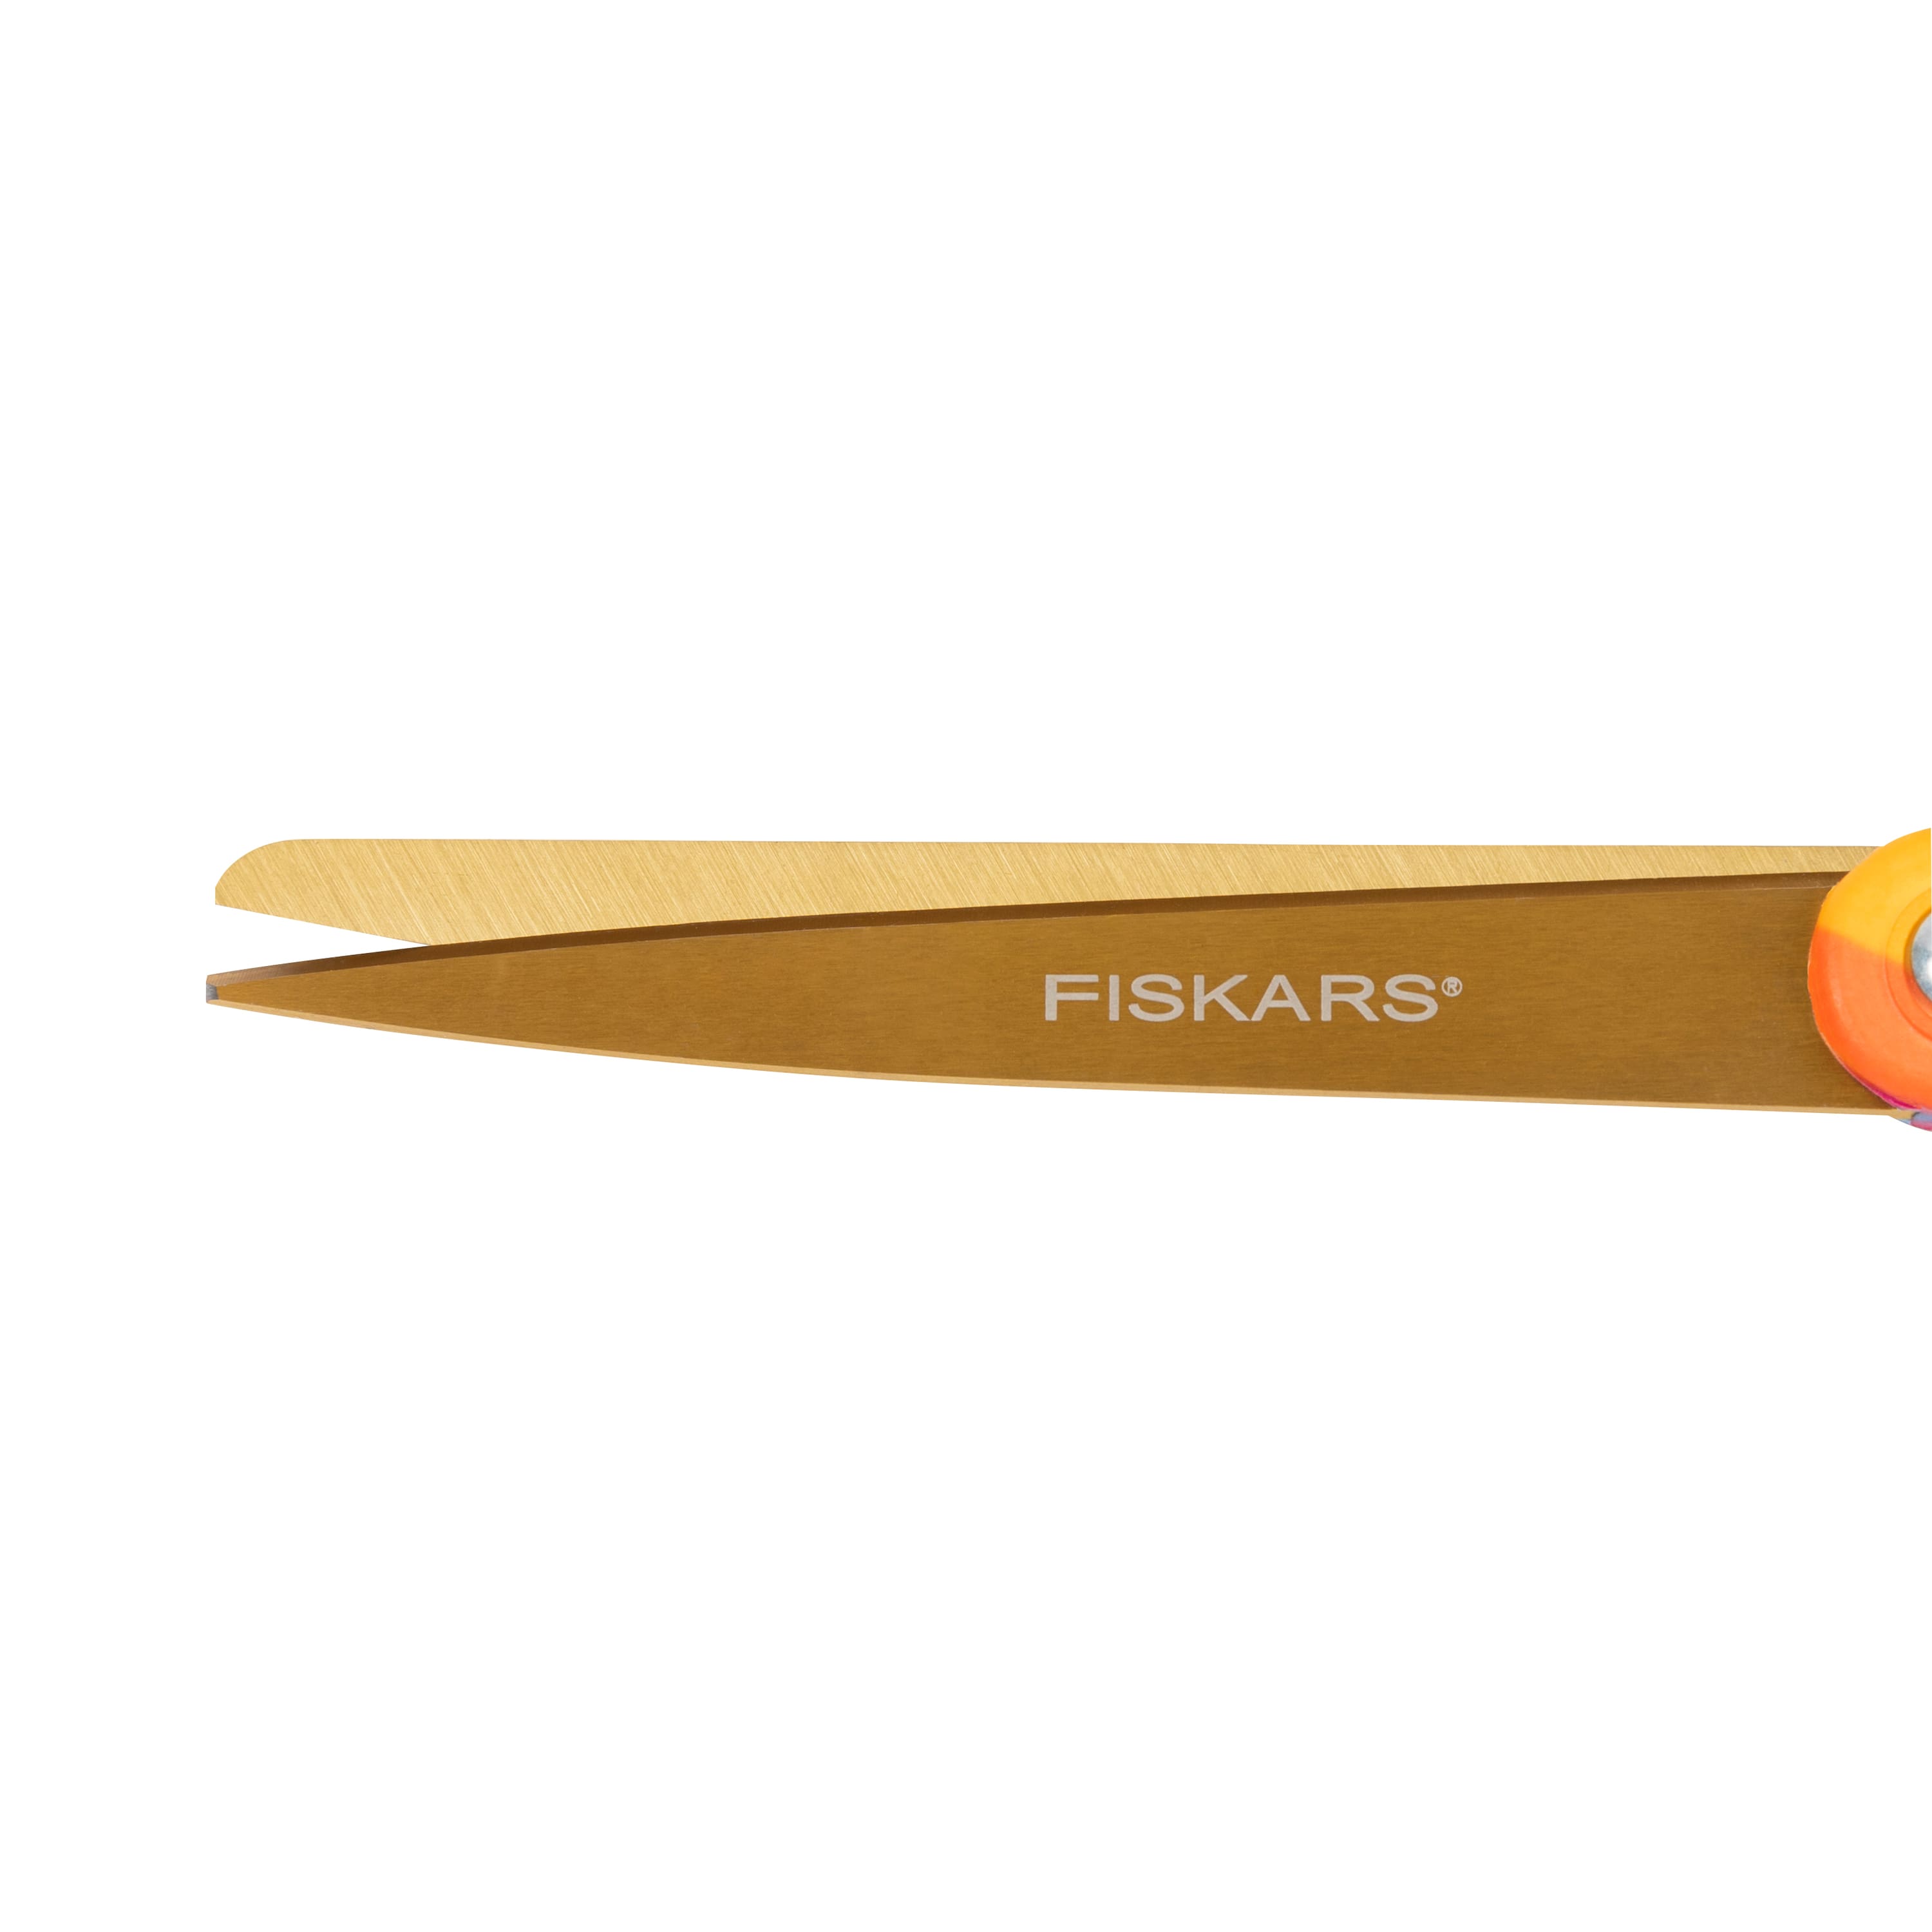 Created with Fiskars 8in Scissors - Sew Bold